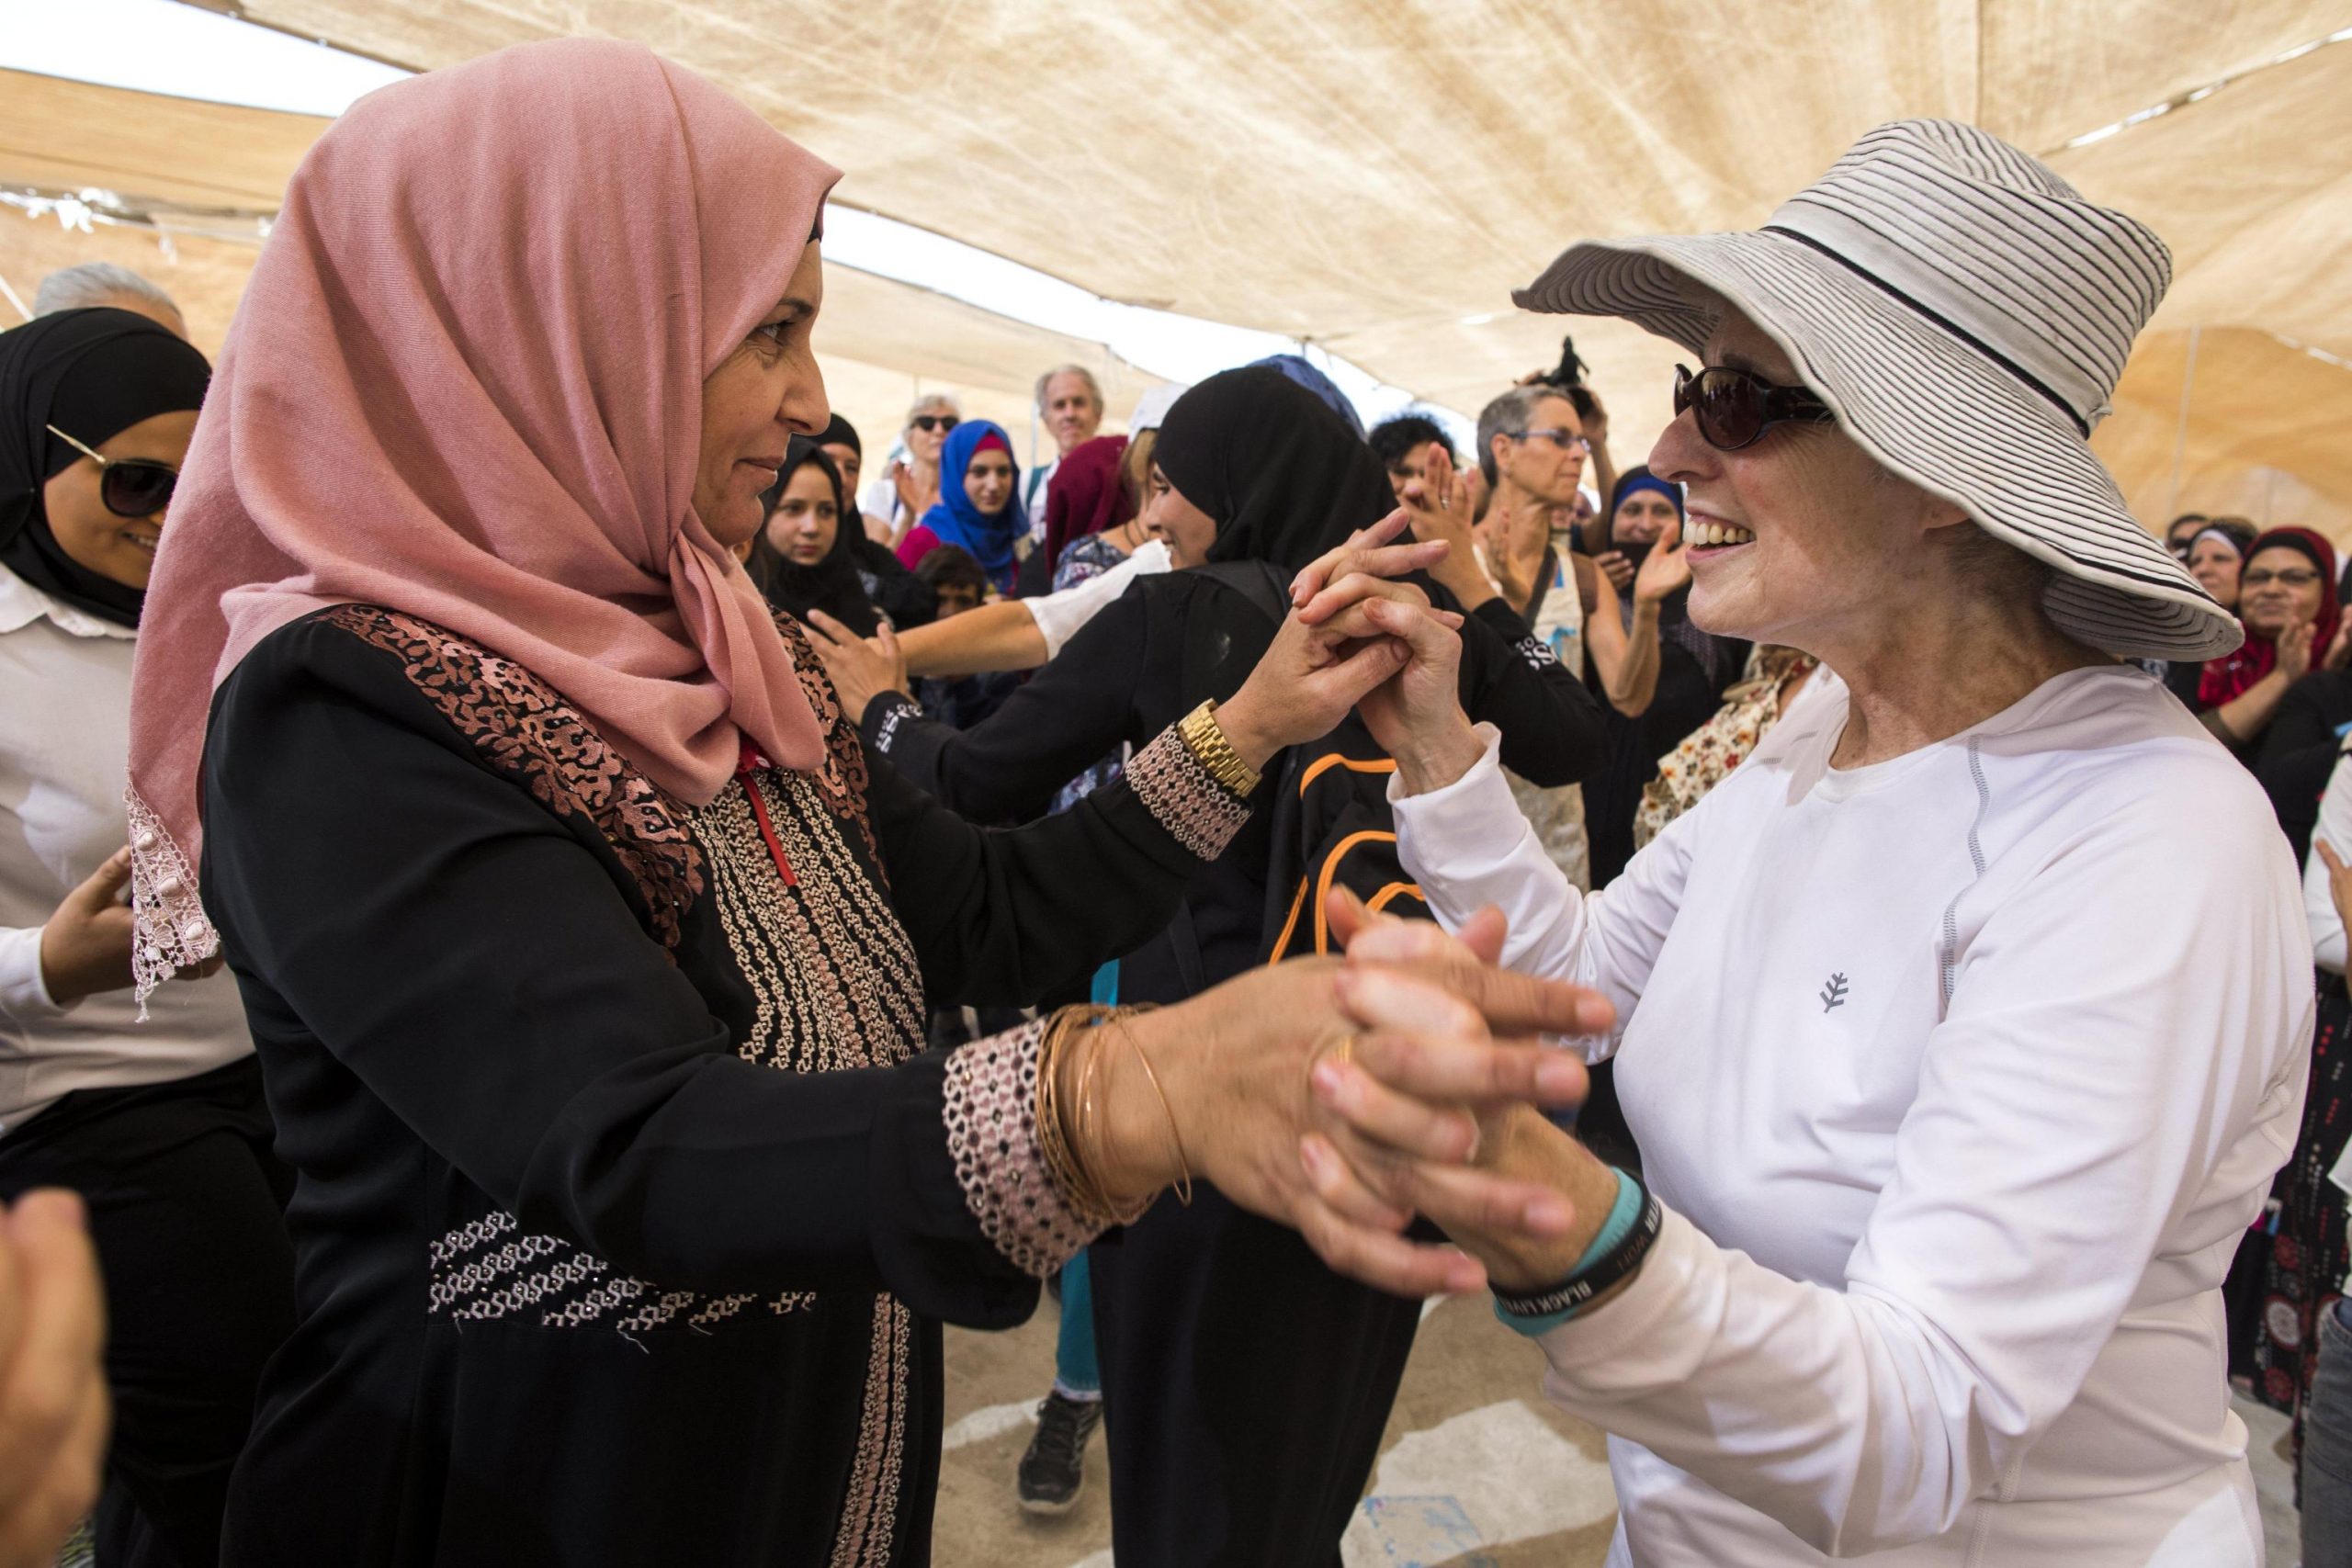 Pace in Medioriente: migliaia di donne in marcia per chiedere accordi